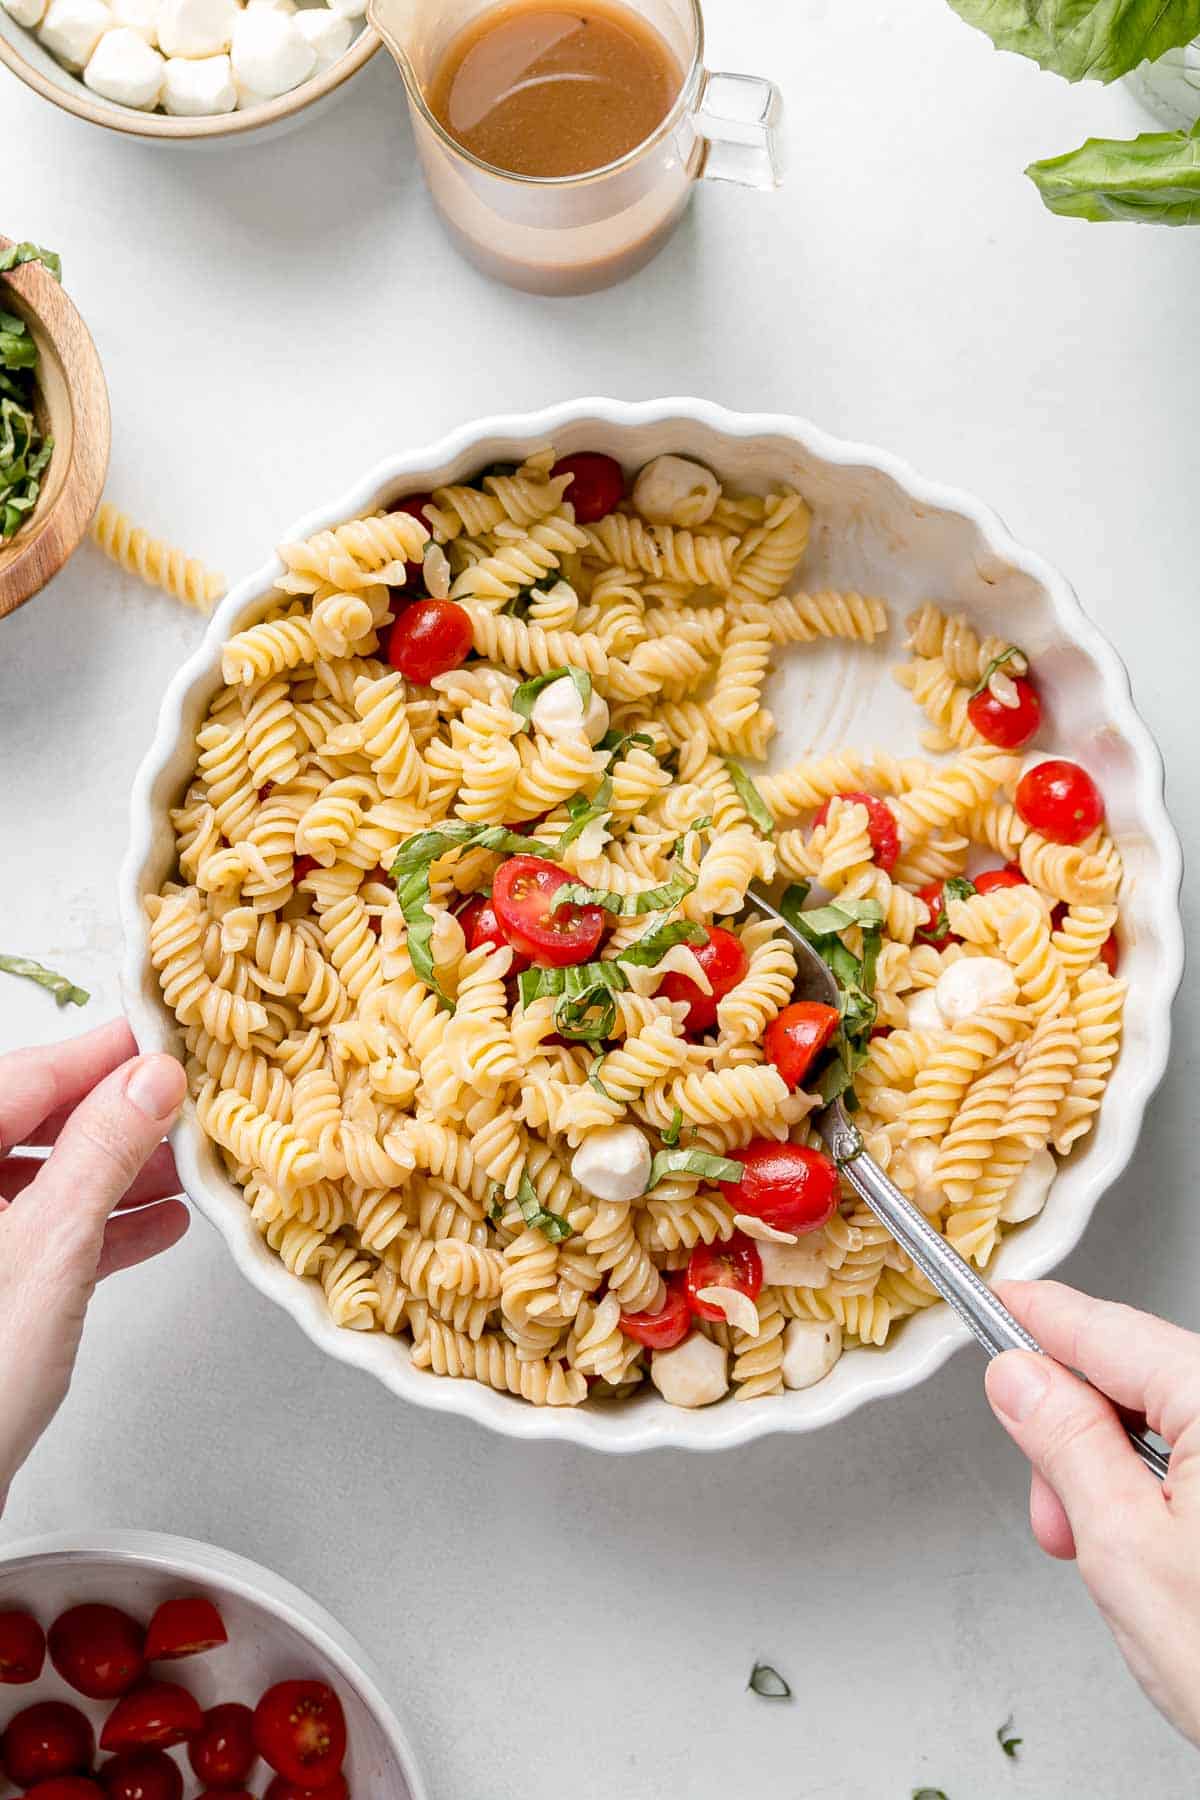 Stirring pasta salad ingredients together in serving dish.